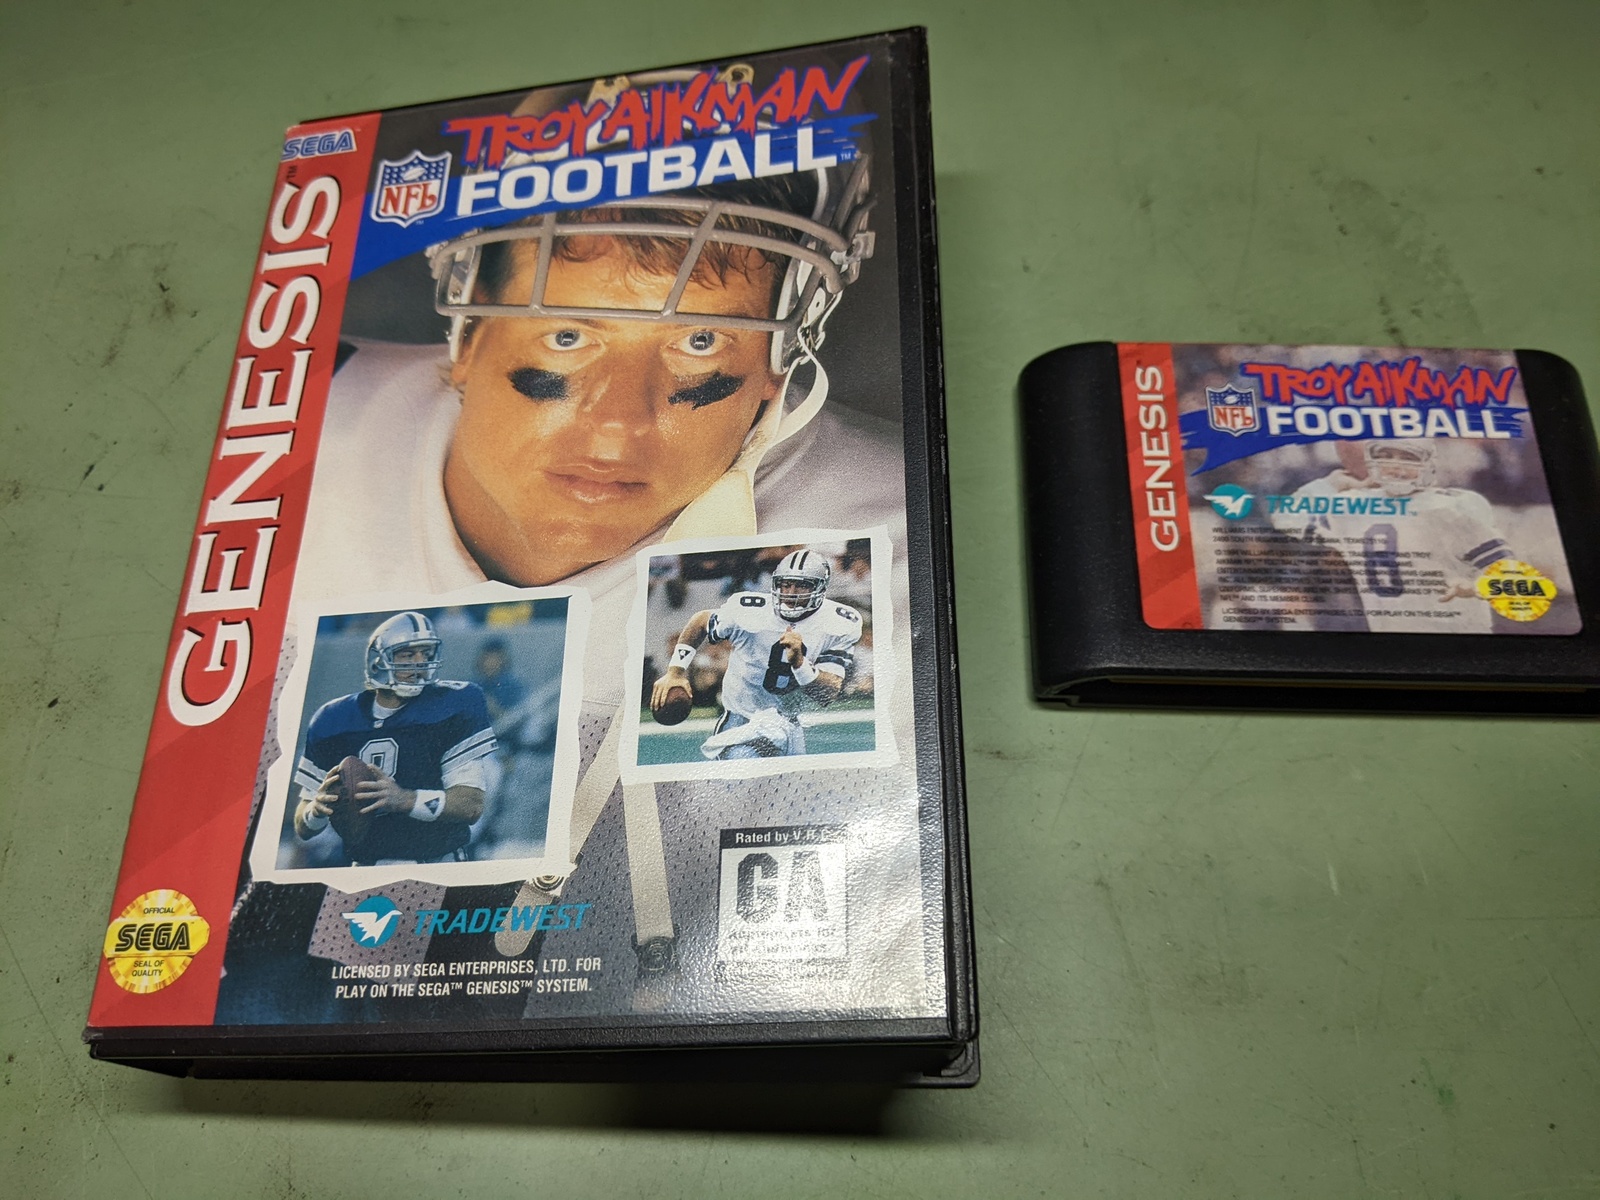 Troy Aikman NFL Football Sega Genesis Cartridge and Case - $7.49